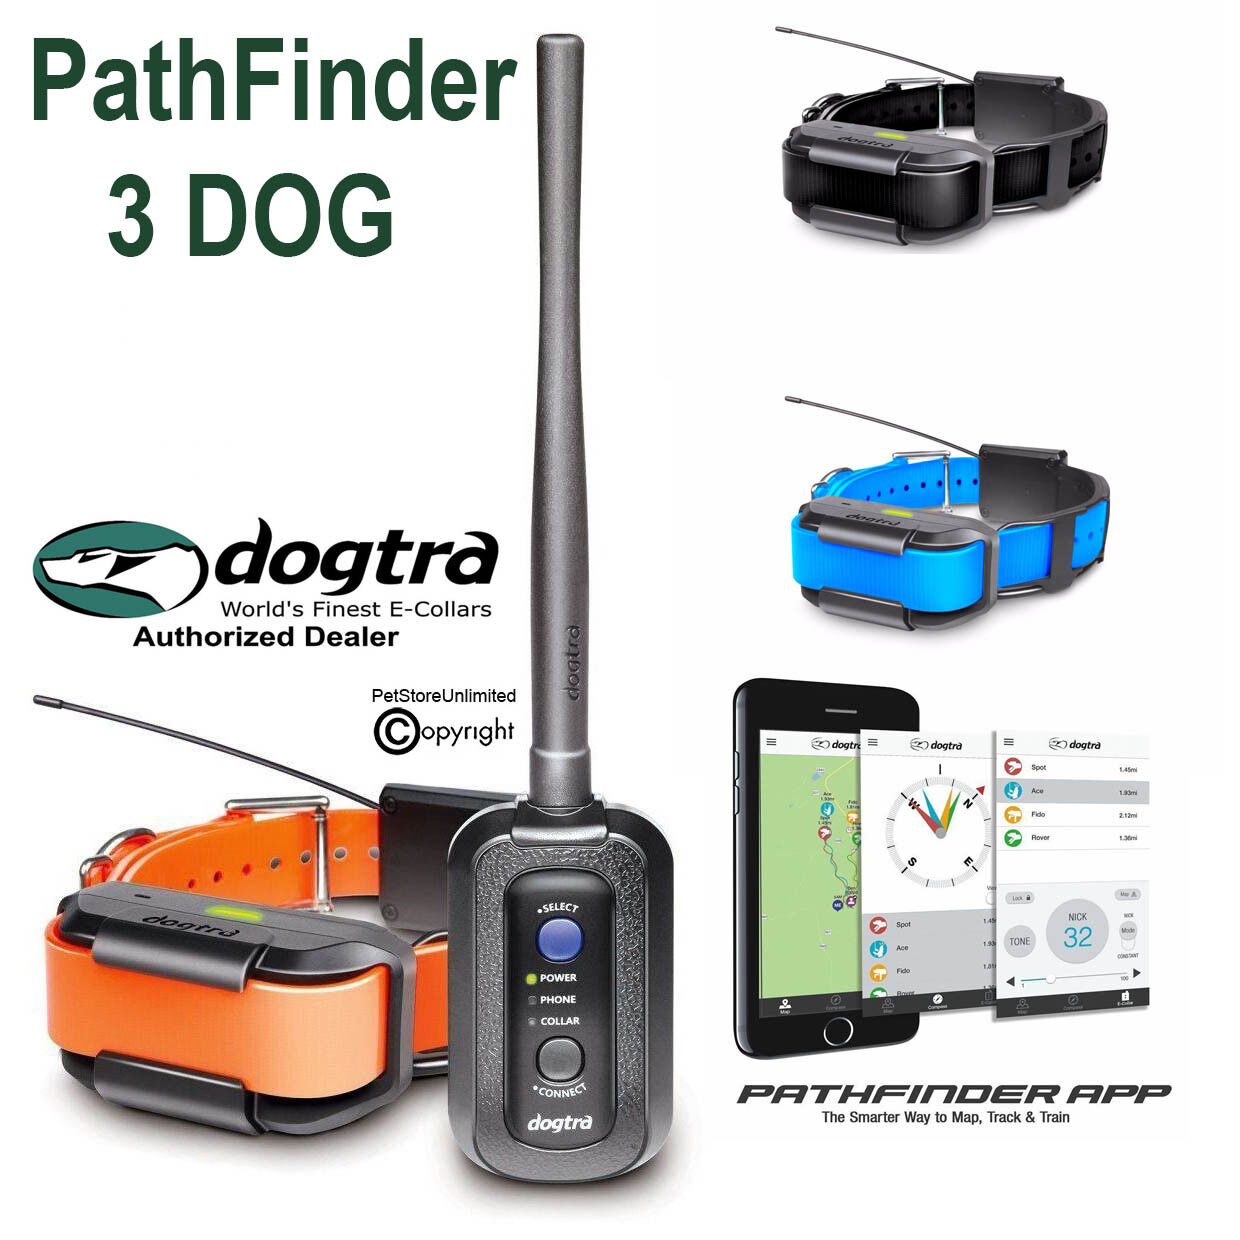 3 DOG Dogtra Pathfinder GPS Track & Train E-Collar Bundle Smartphone Based 9-Mi